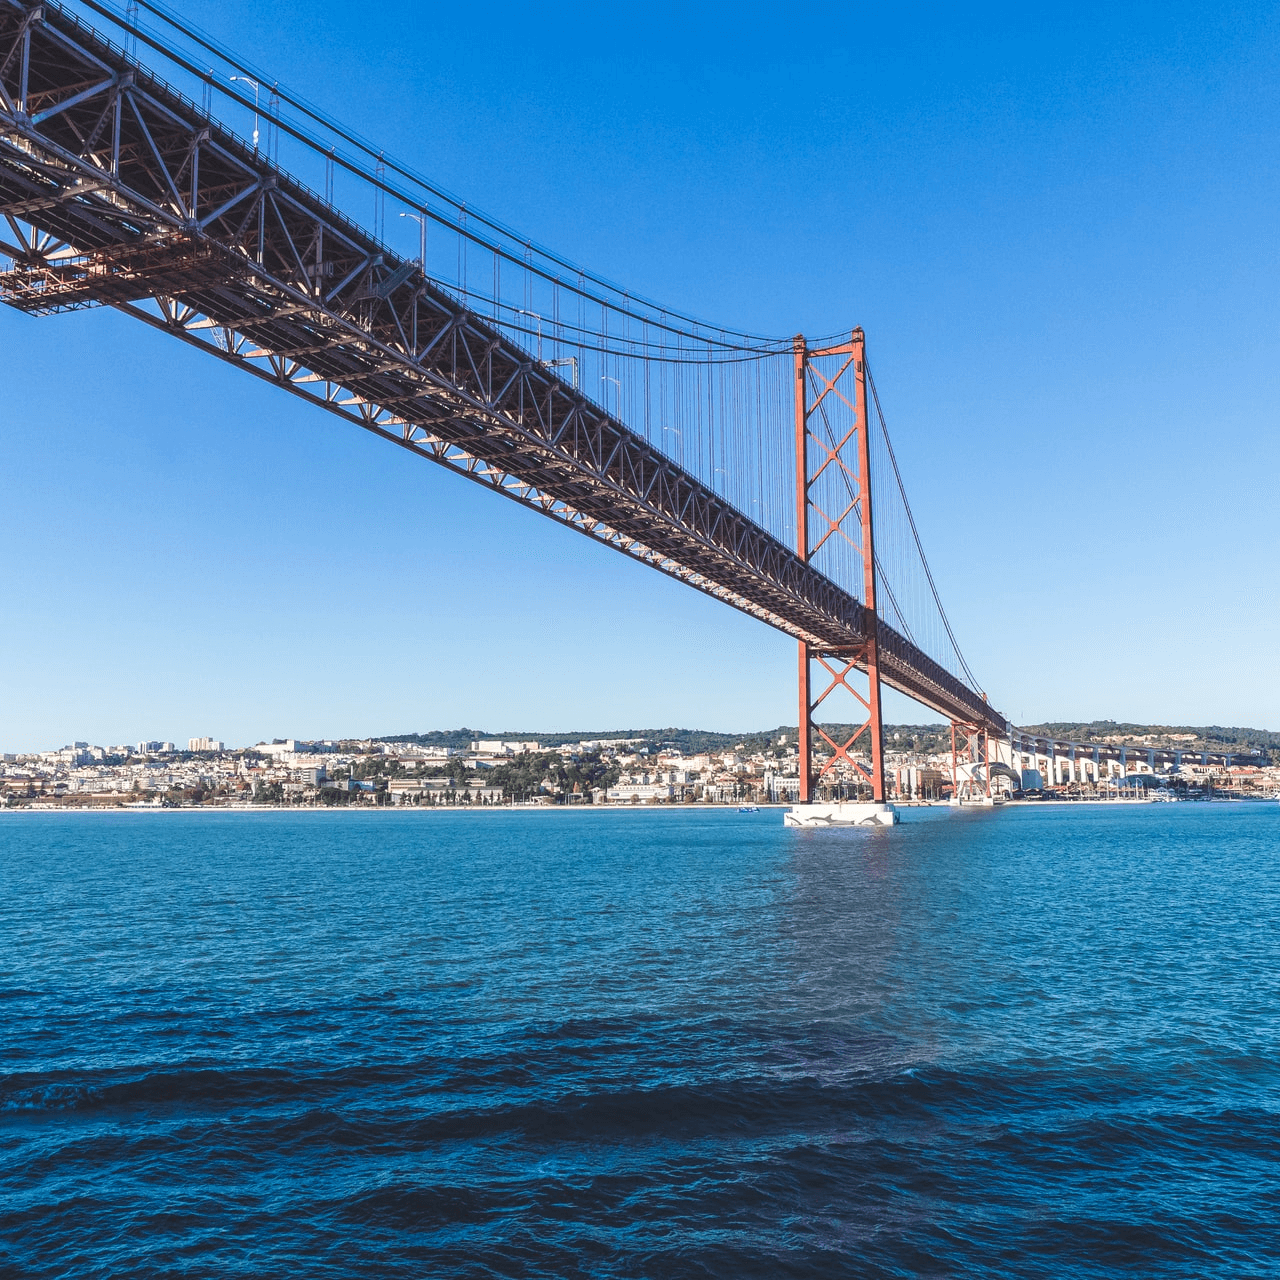 25 de Abril Bridge between Almada and Lisbon across the Tagus River